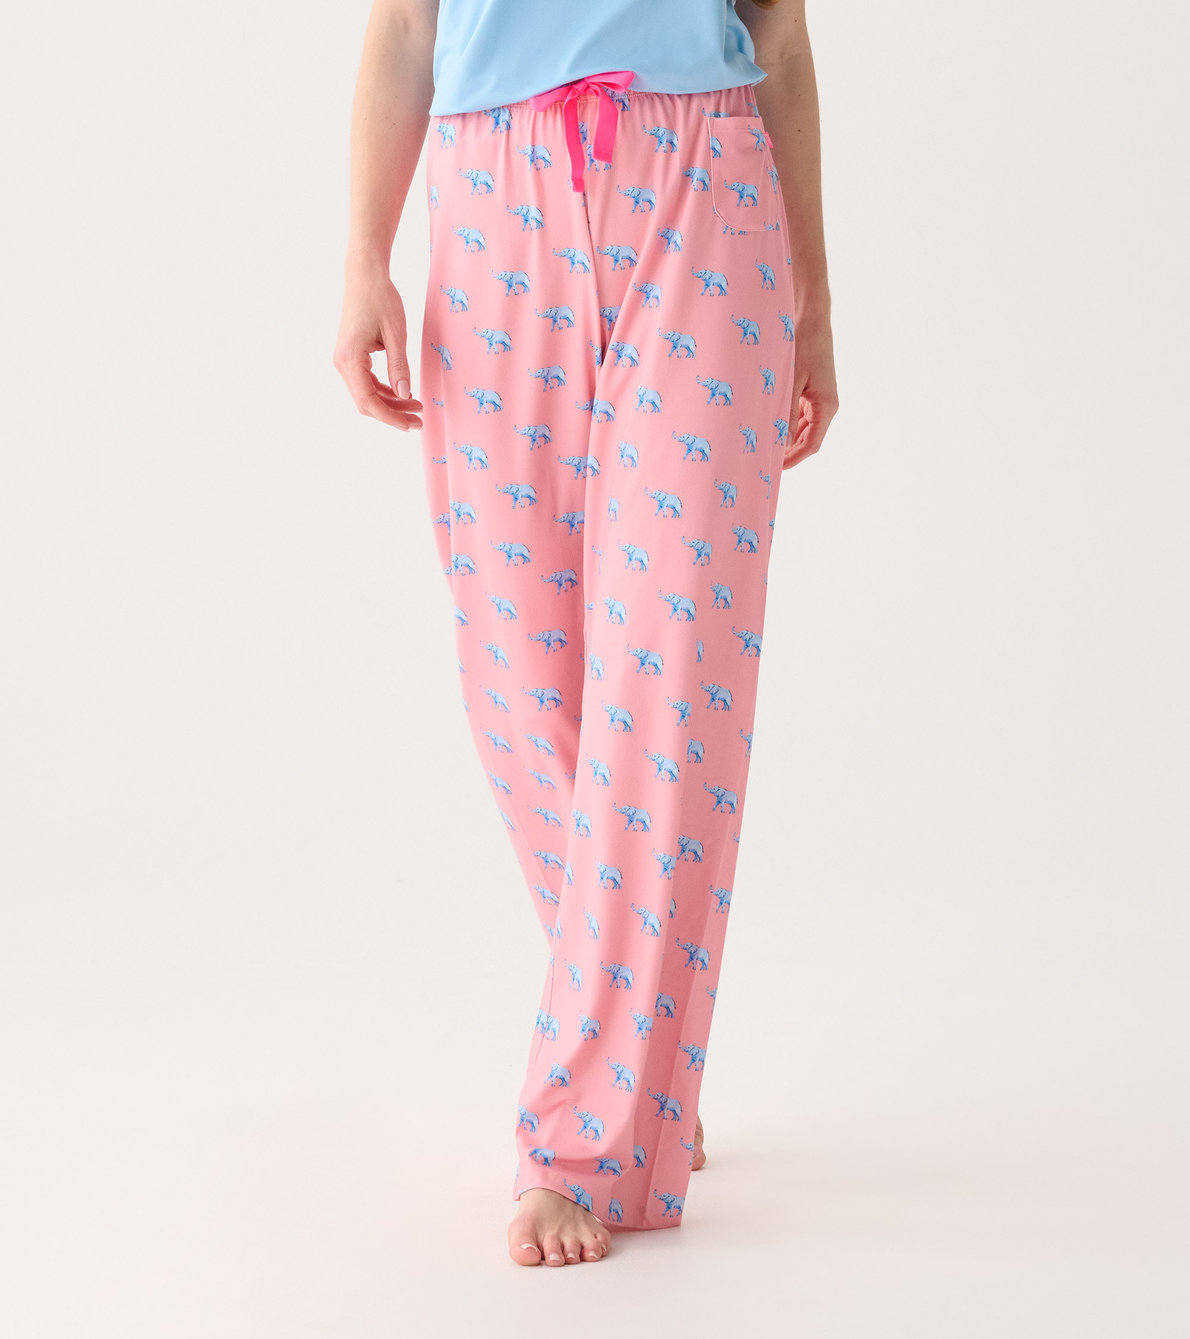 View larger image of Capelton Road Women's Elephantastic Pajama Pants